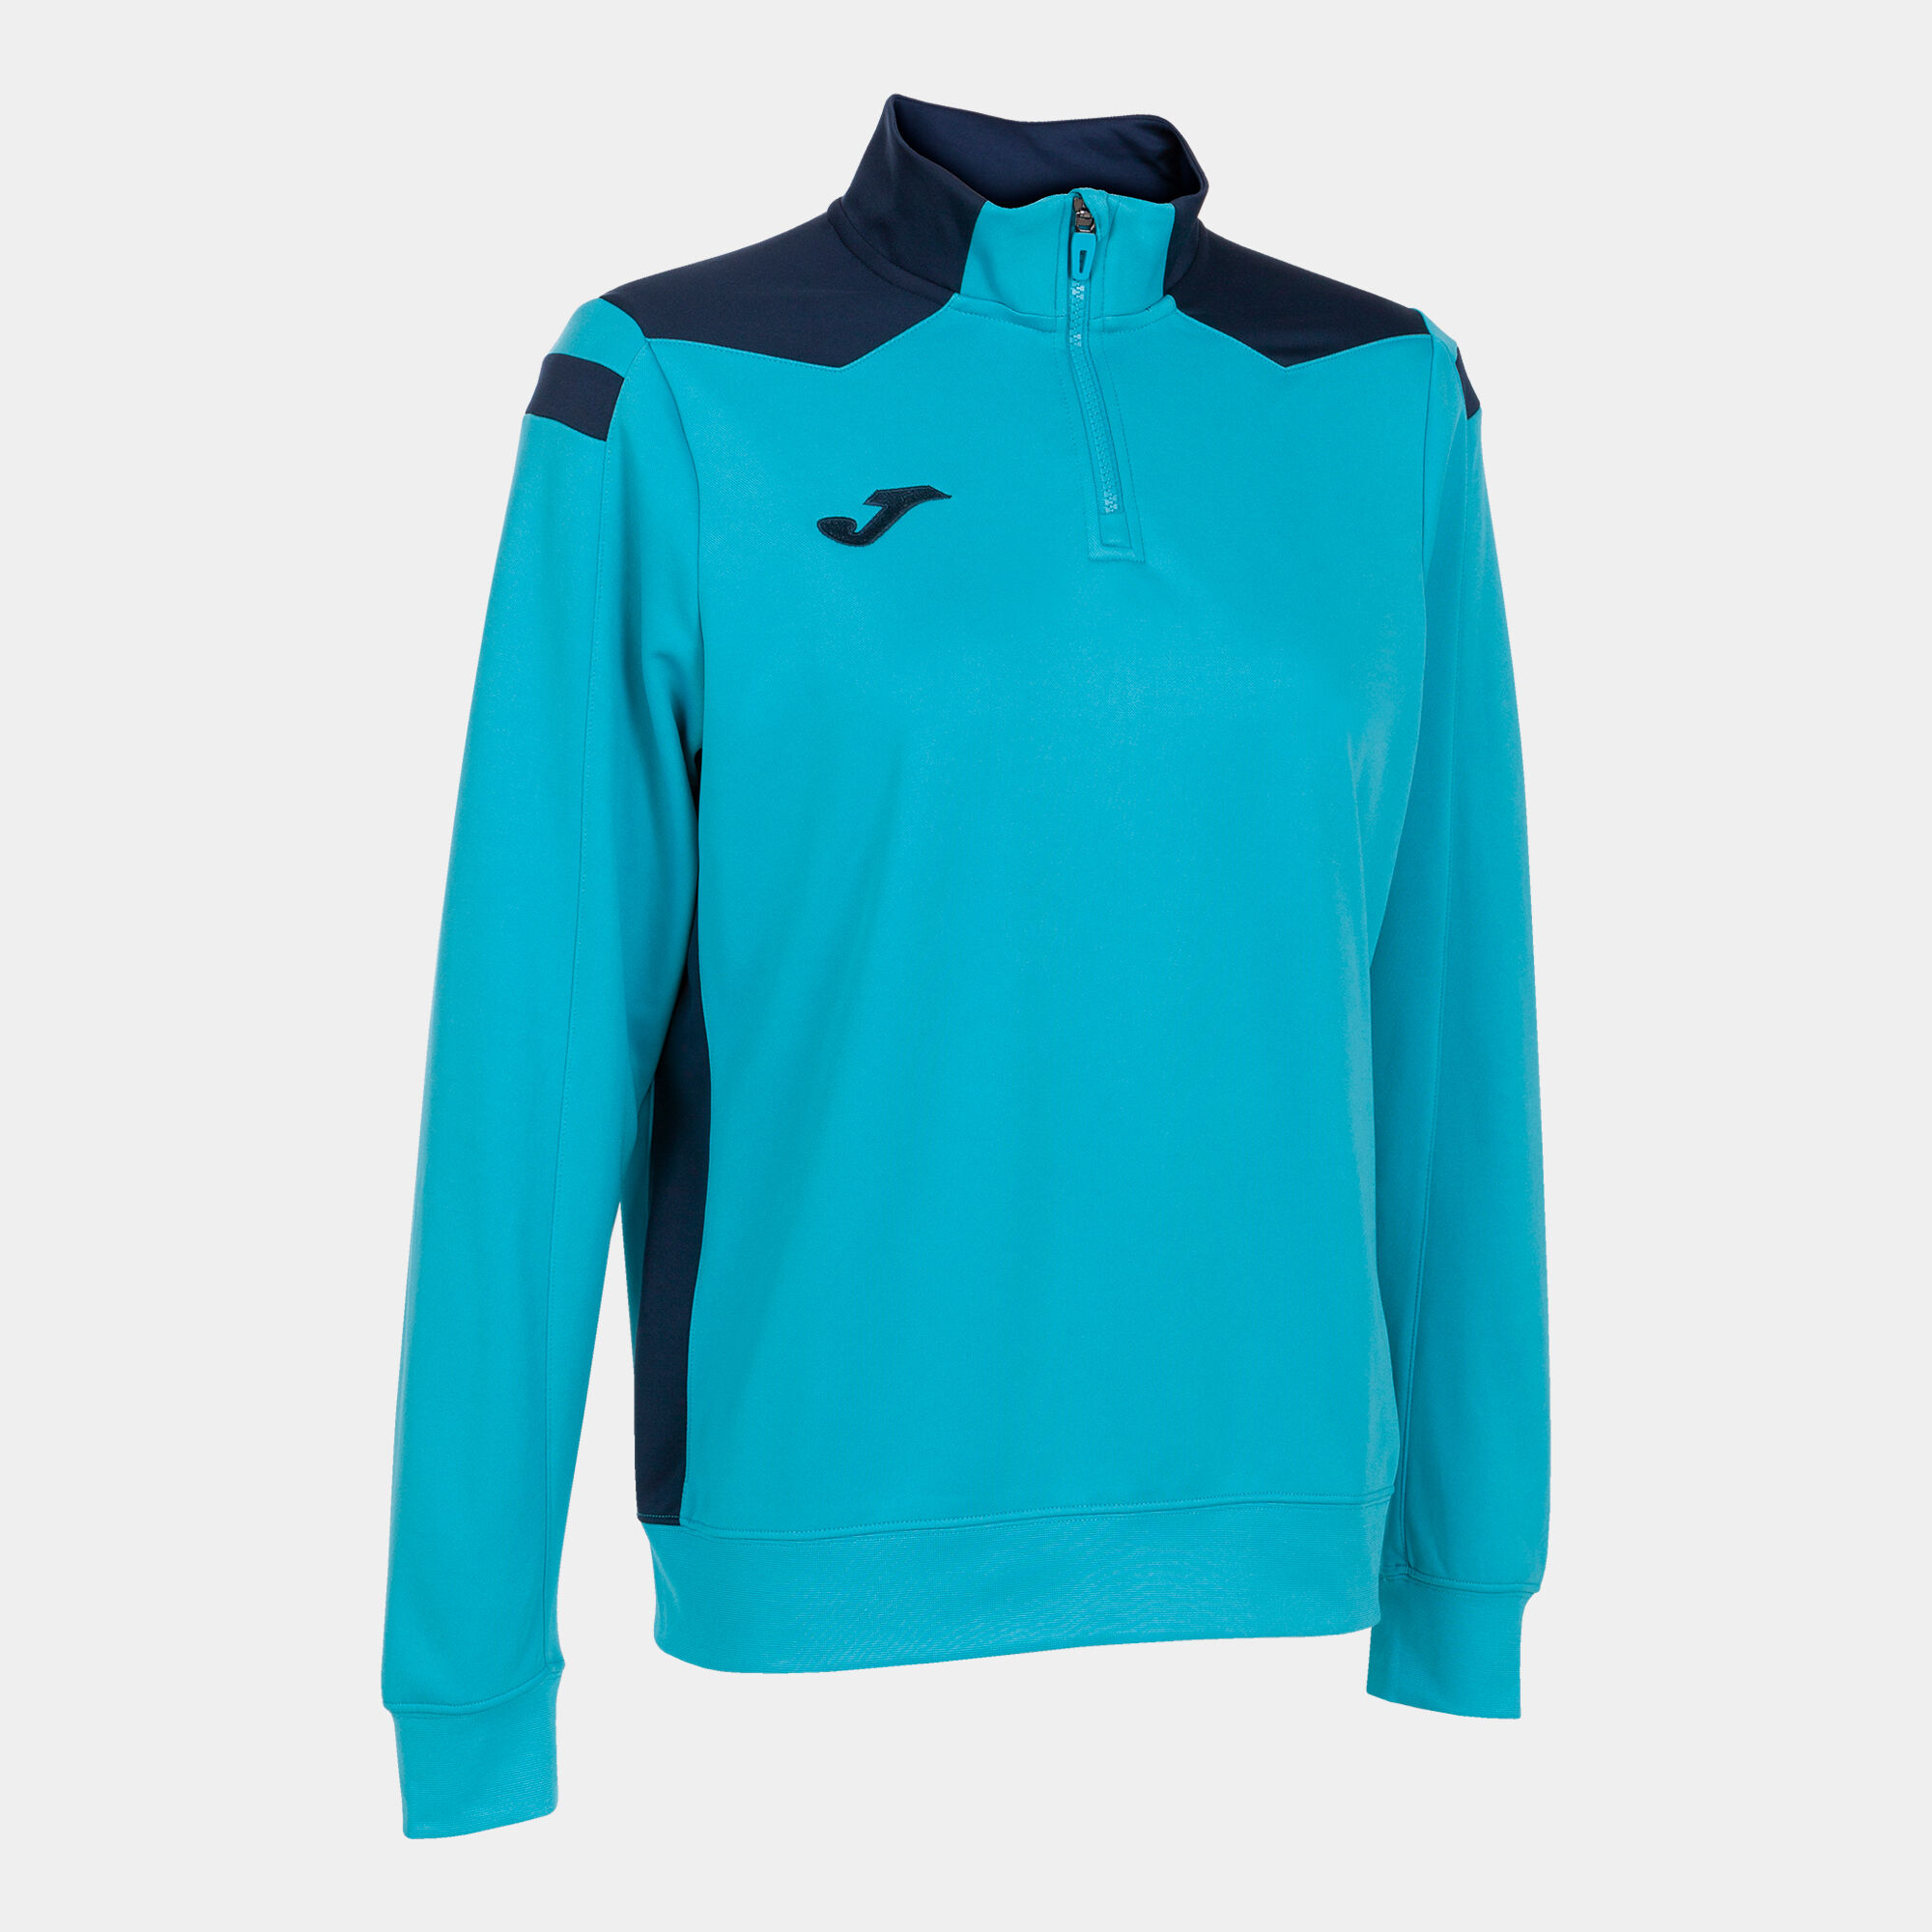 Sweatshirt woman Championship VI fluorescent turquoise navy blue